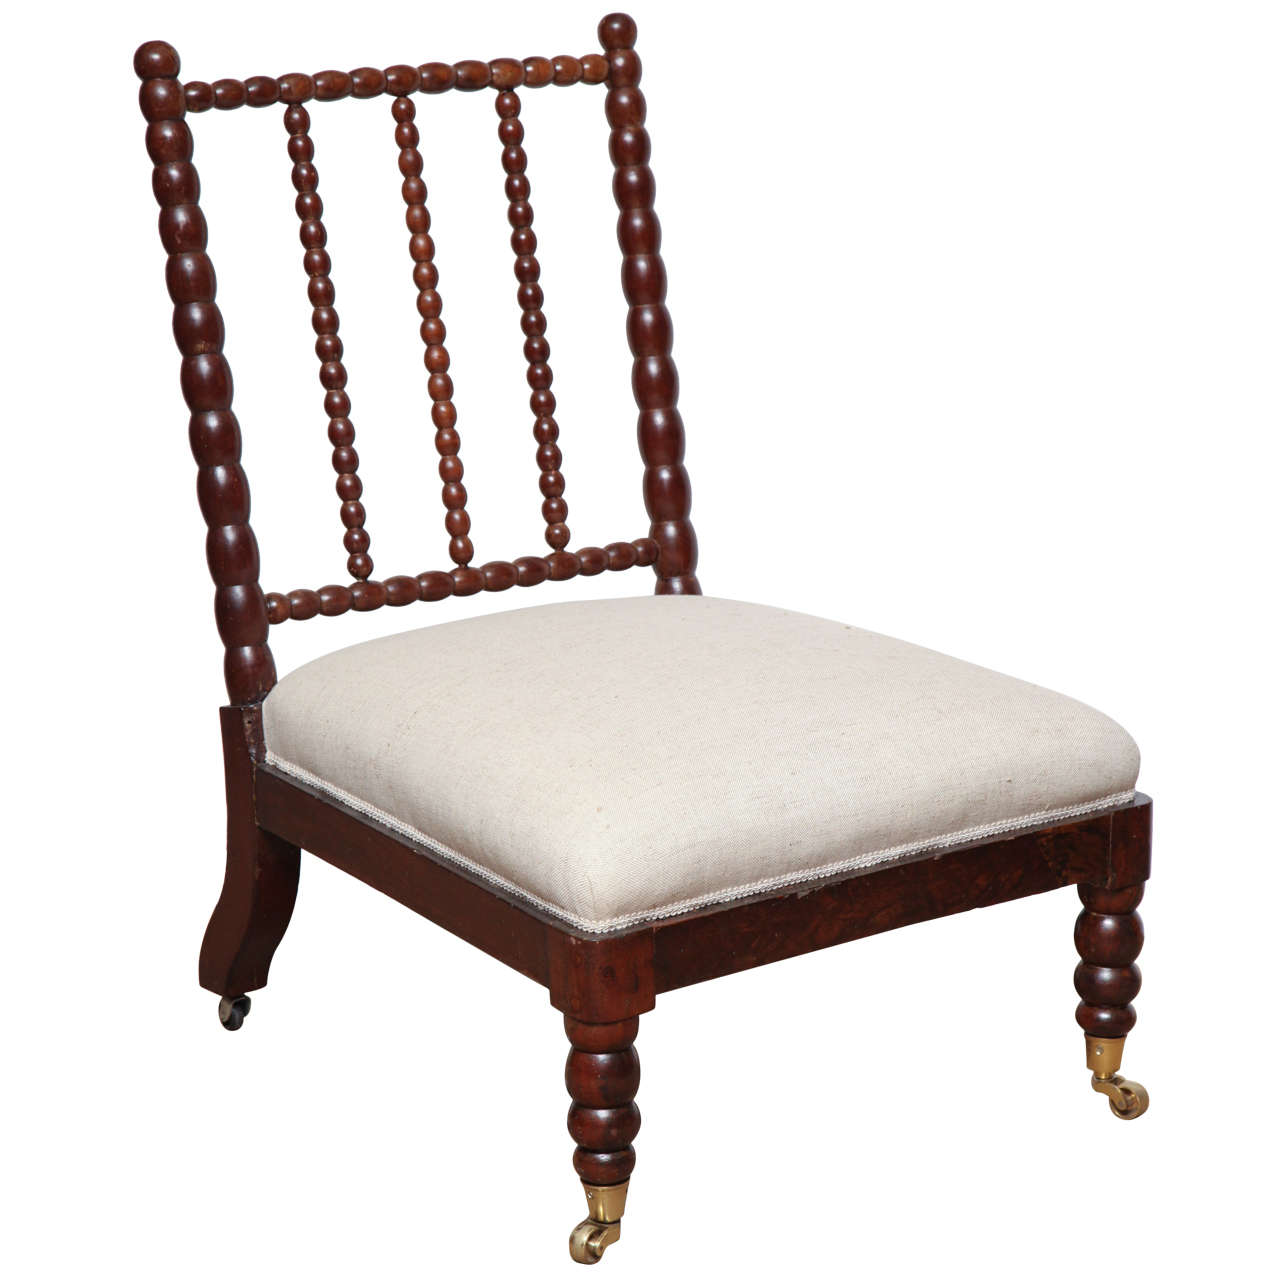 19th Century Spool Chair